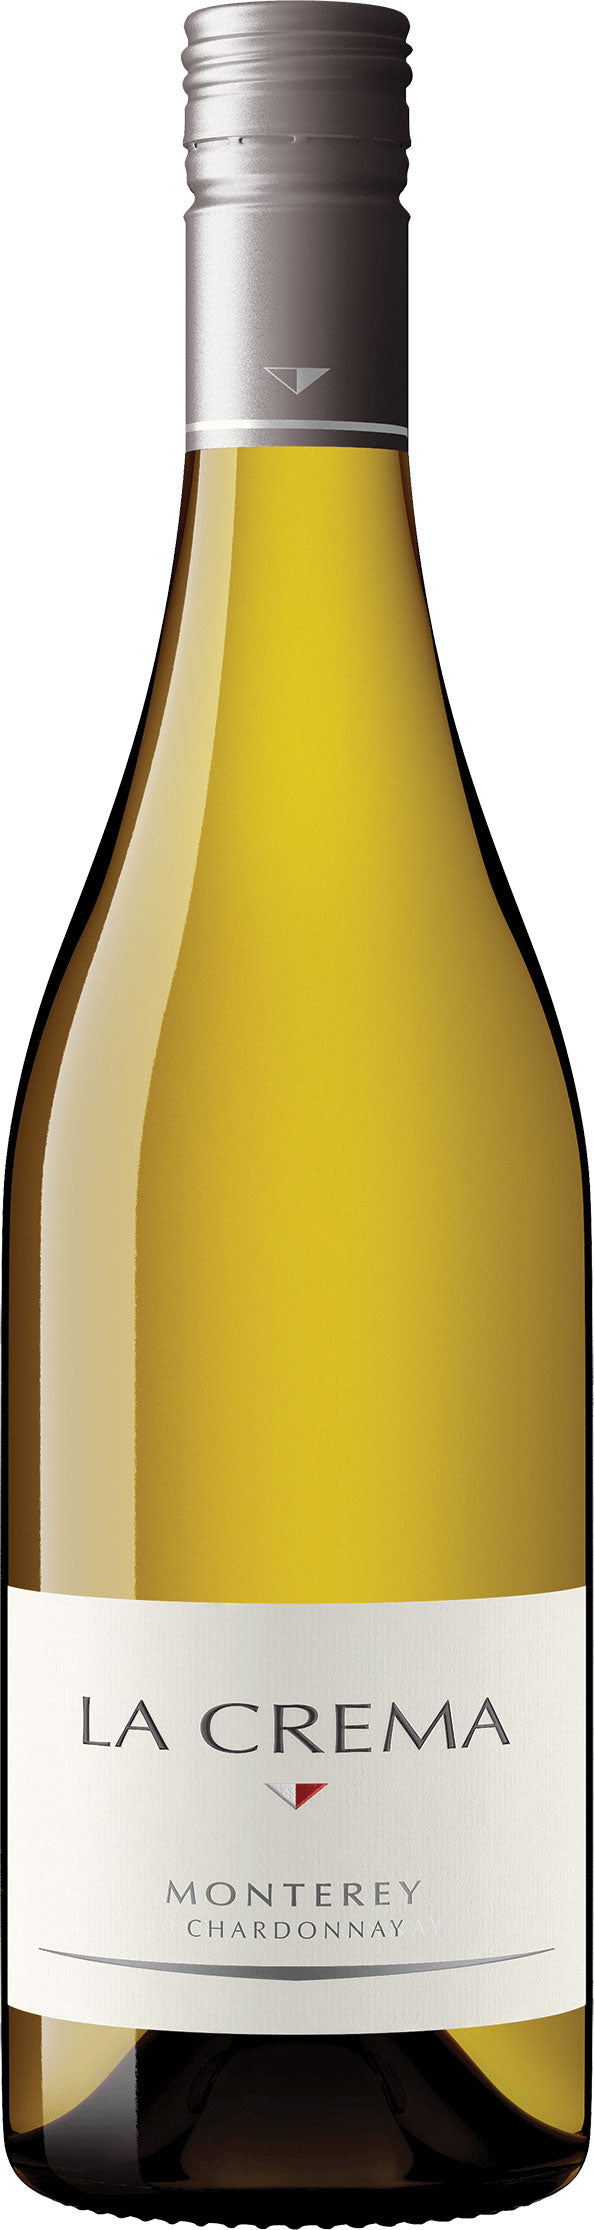 La Crema Chardonnay Monterey 2019